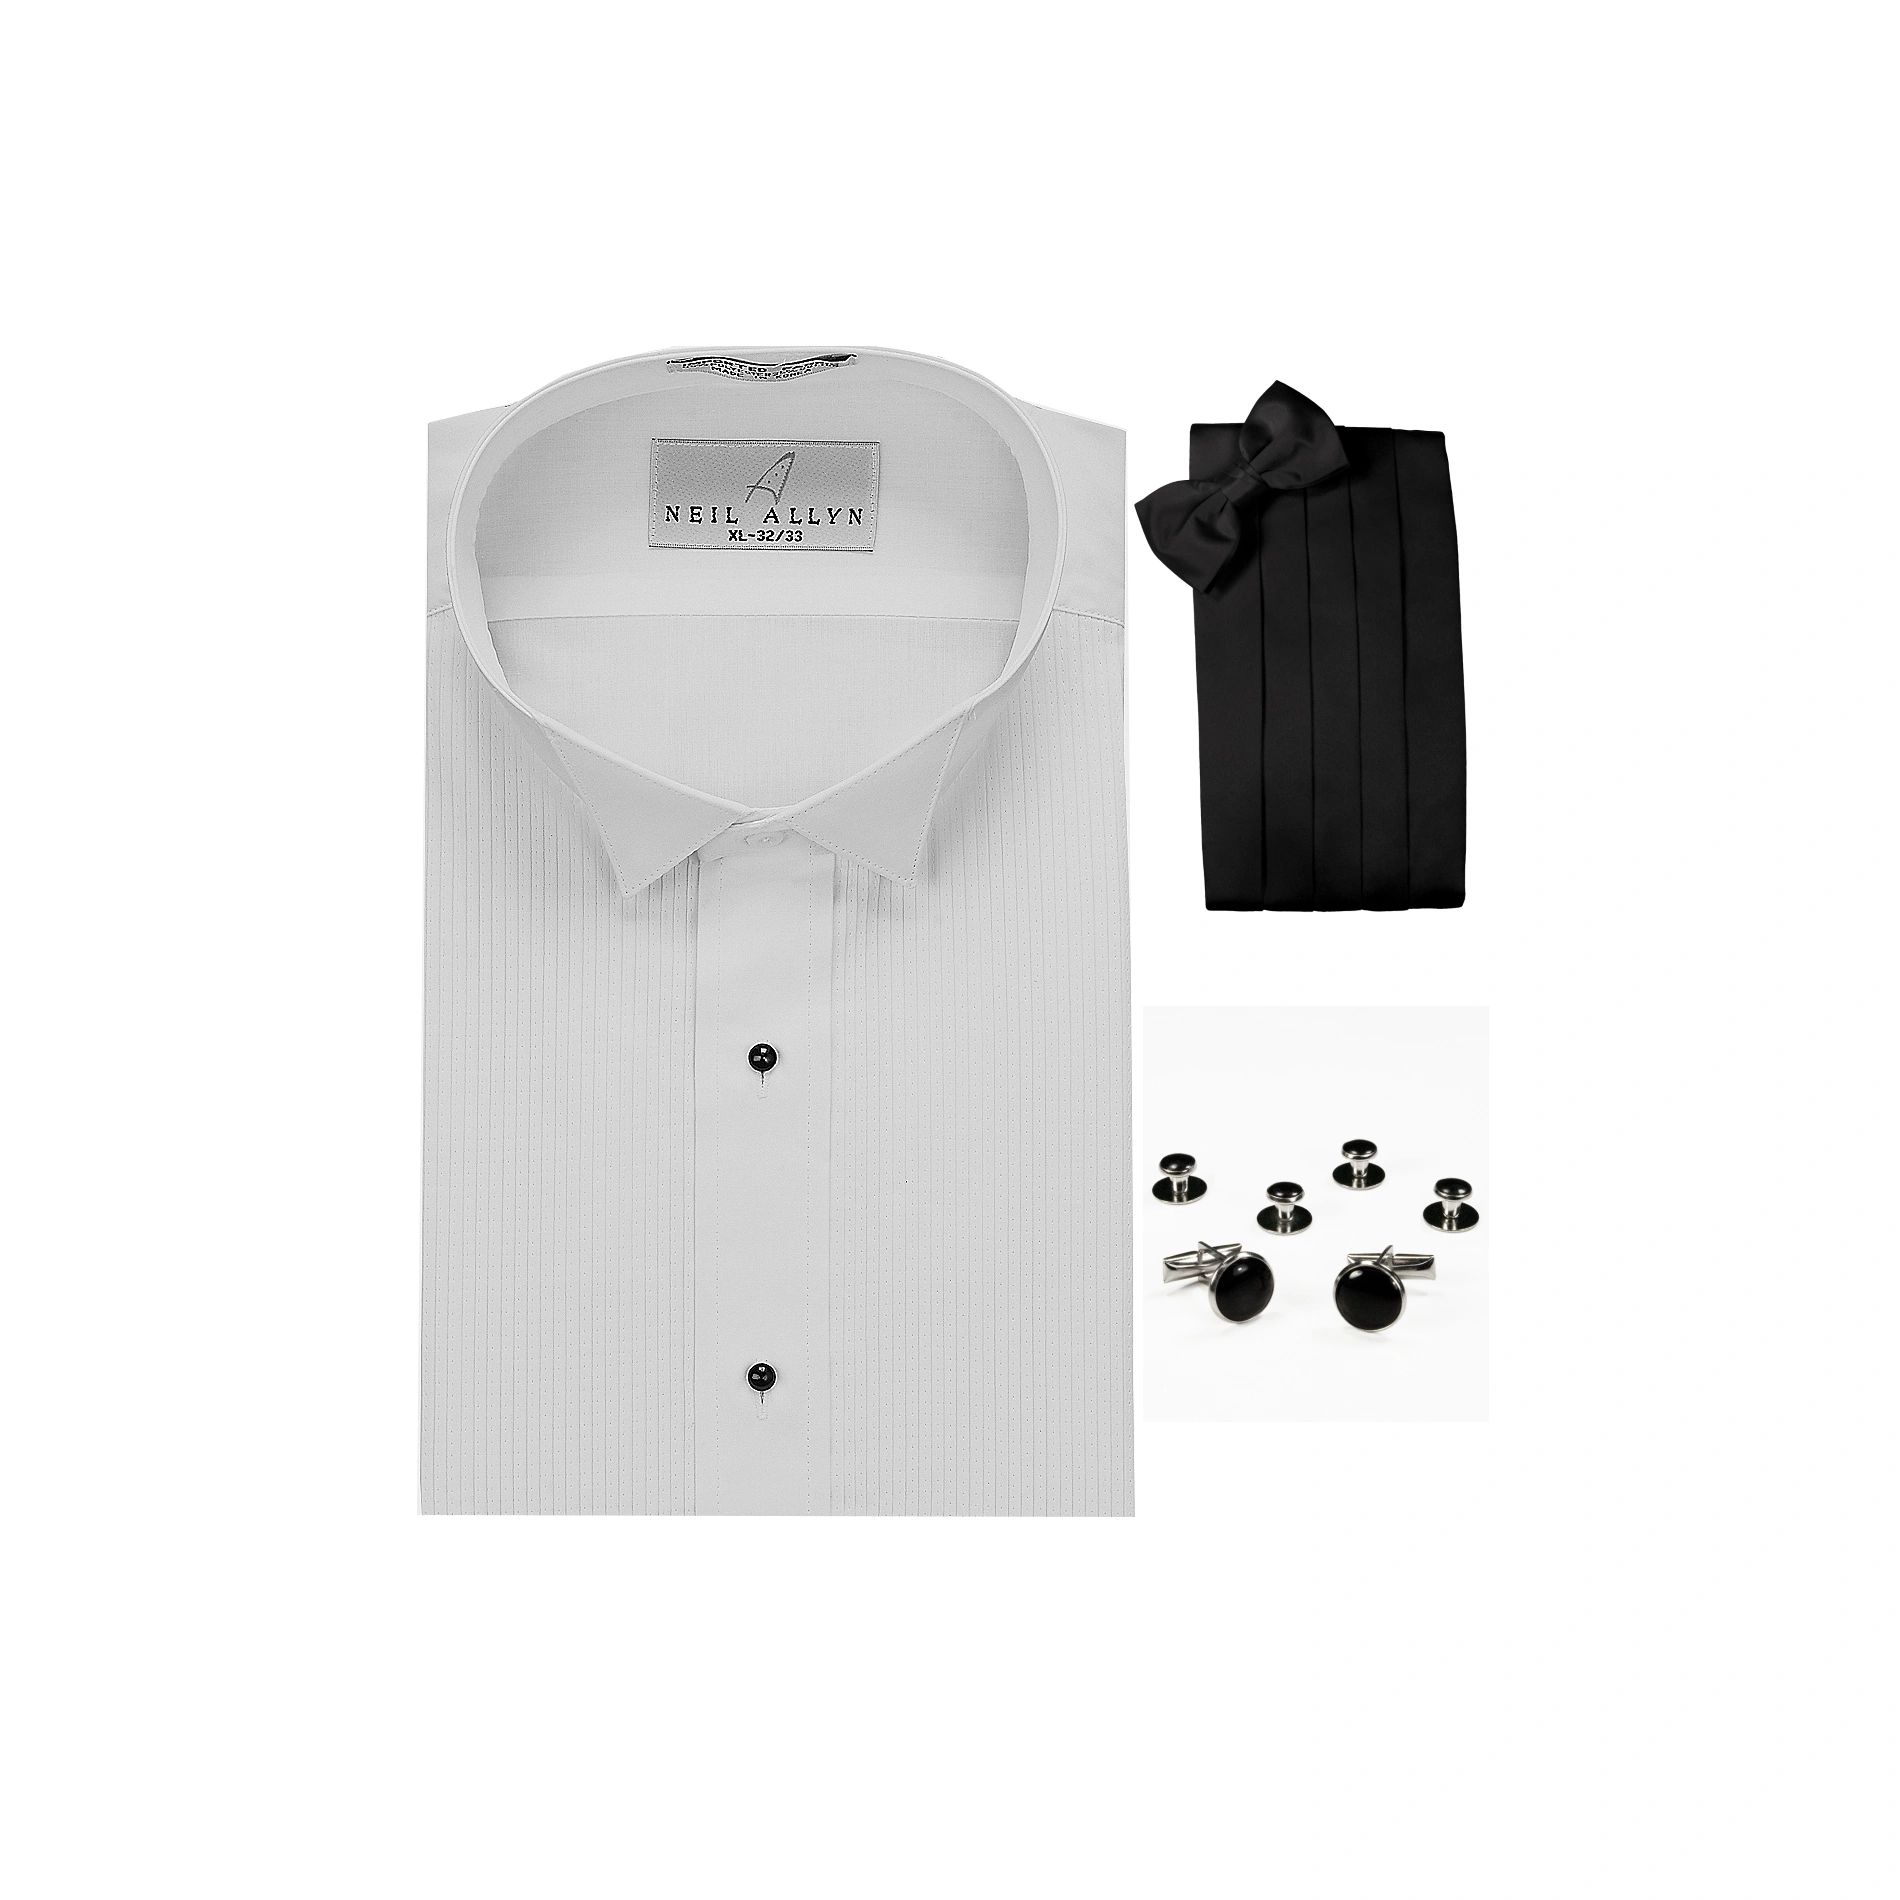 Neil Allyn Wing Collar 1/8" Pleats Formal Tuxedo Shirt, Cummerbund, Bow-Tie, Cuff Links & Studs Set